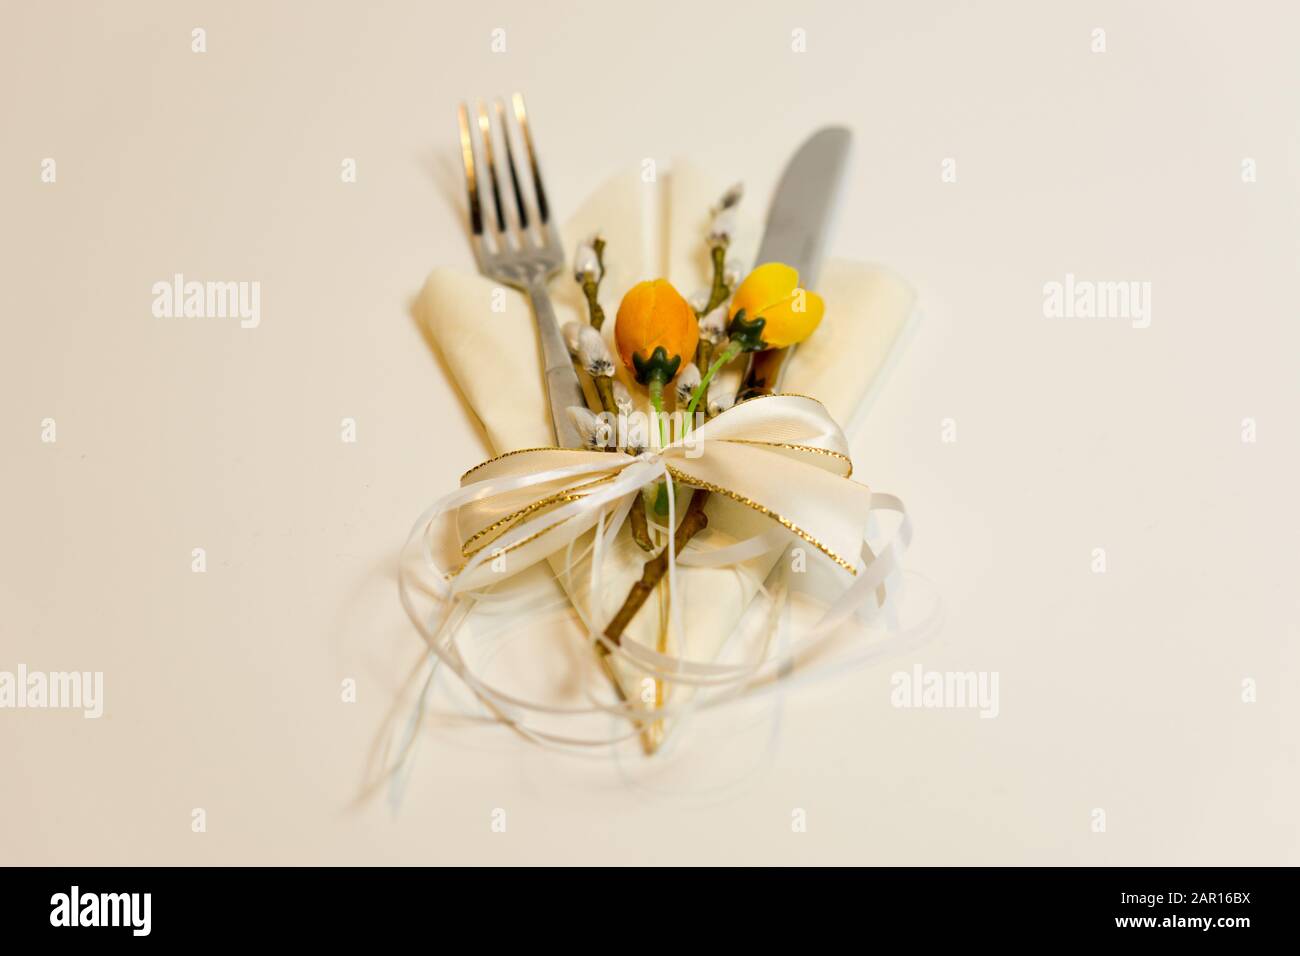 spring-like cutlery set Stock Photo